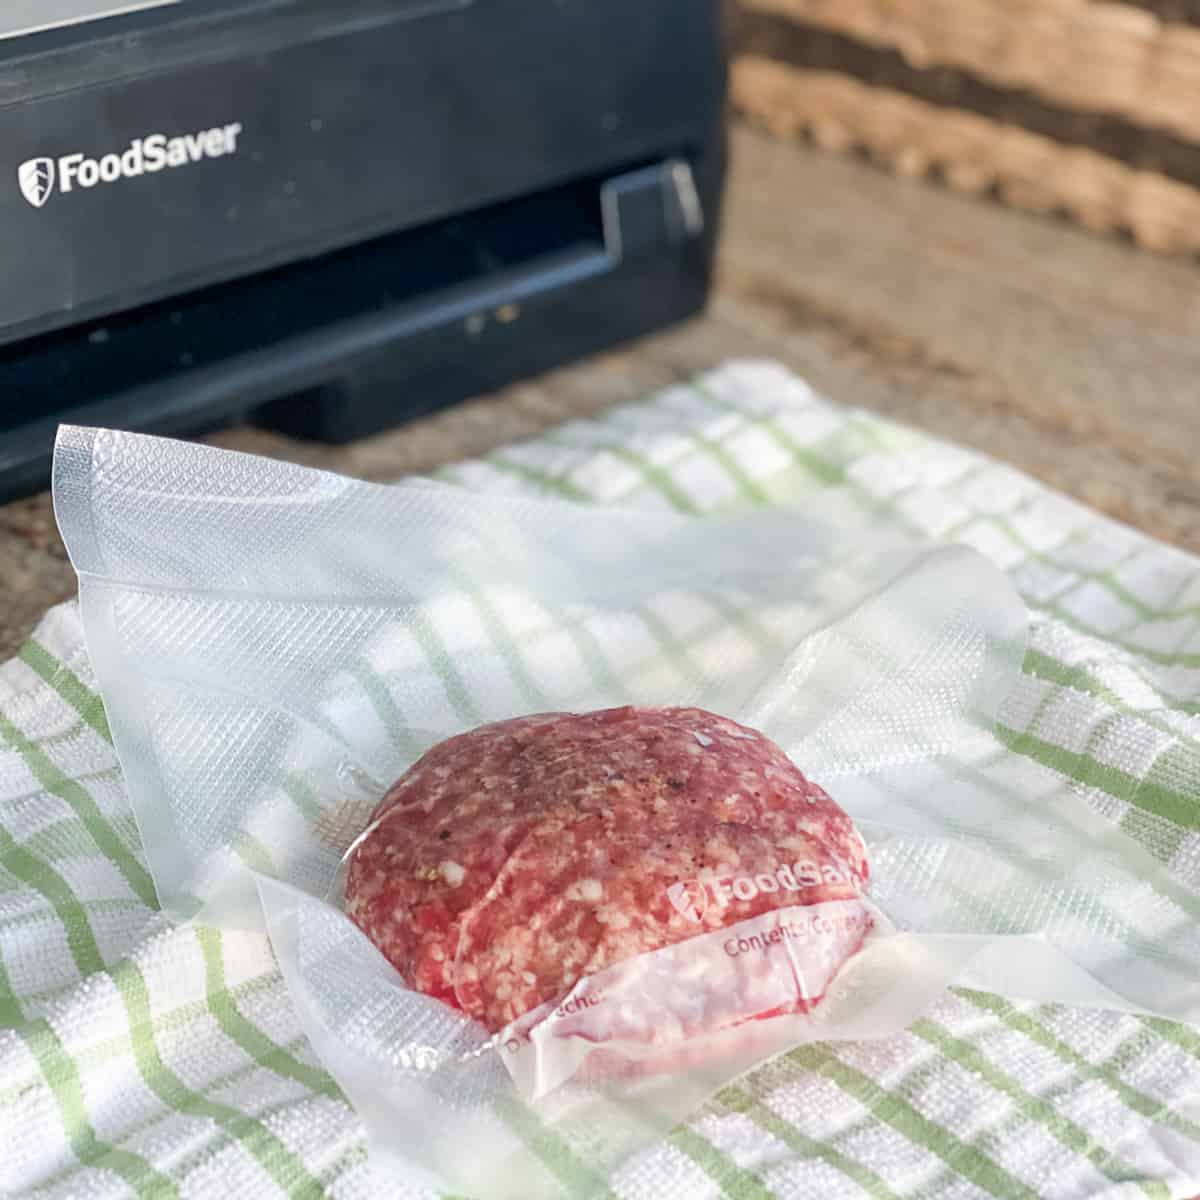 Uncooked lamb burger patty in vacuum sealed plastic bag on top of tea towel.